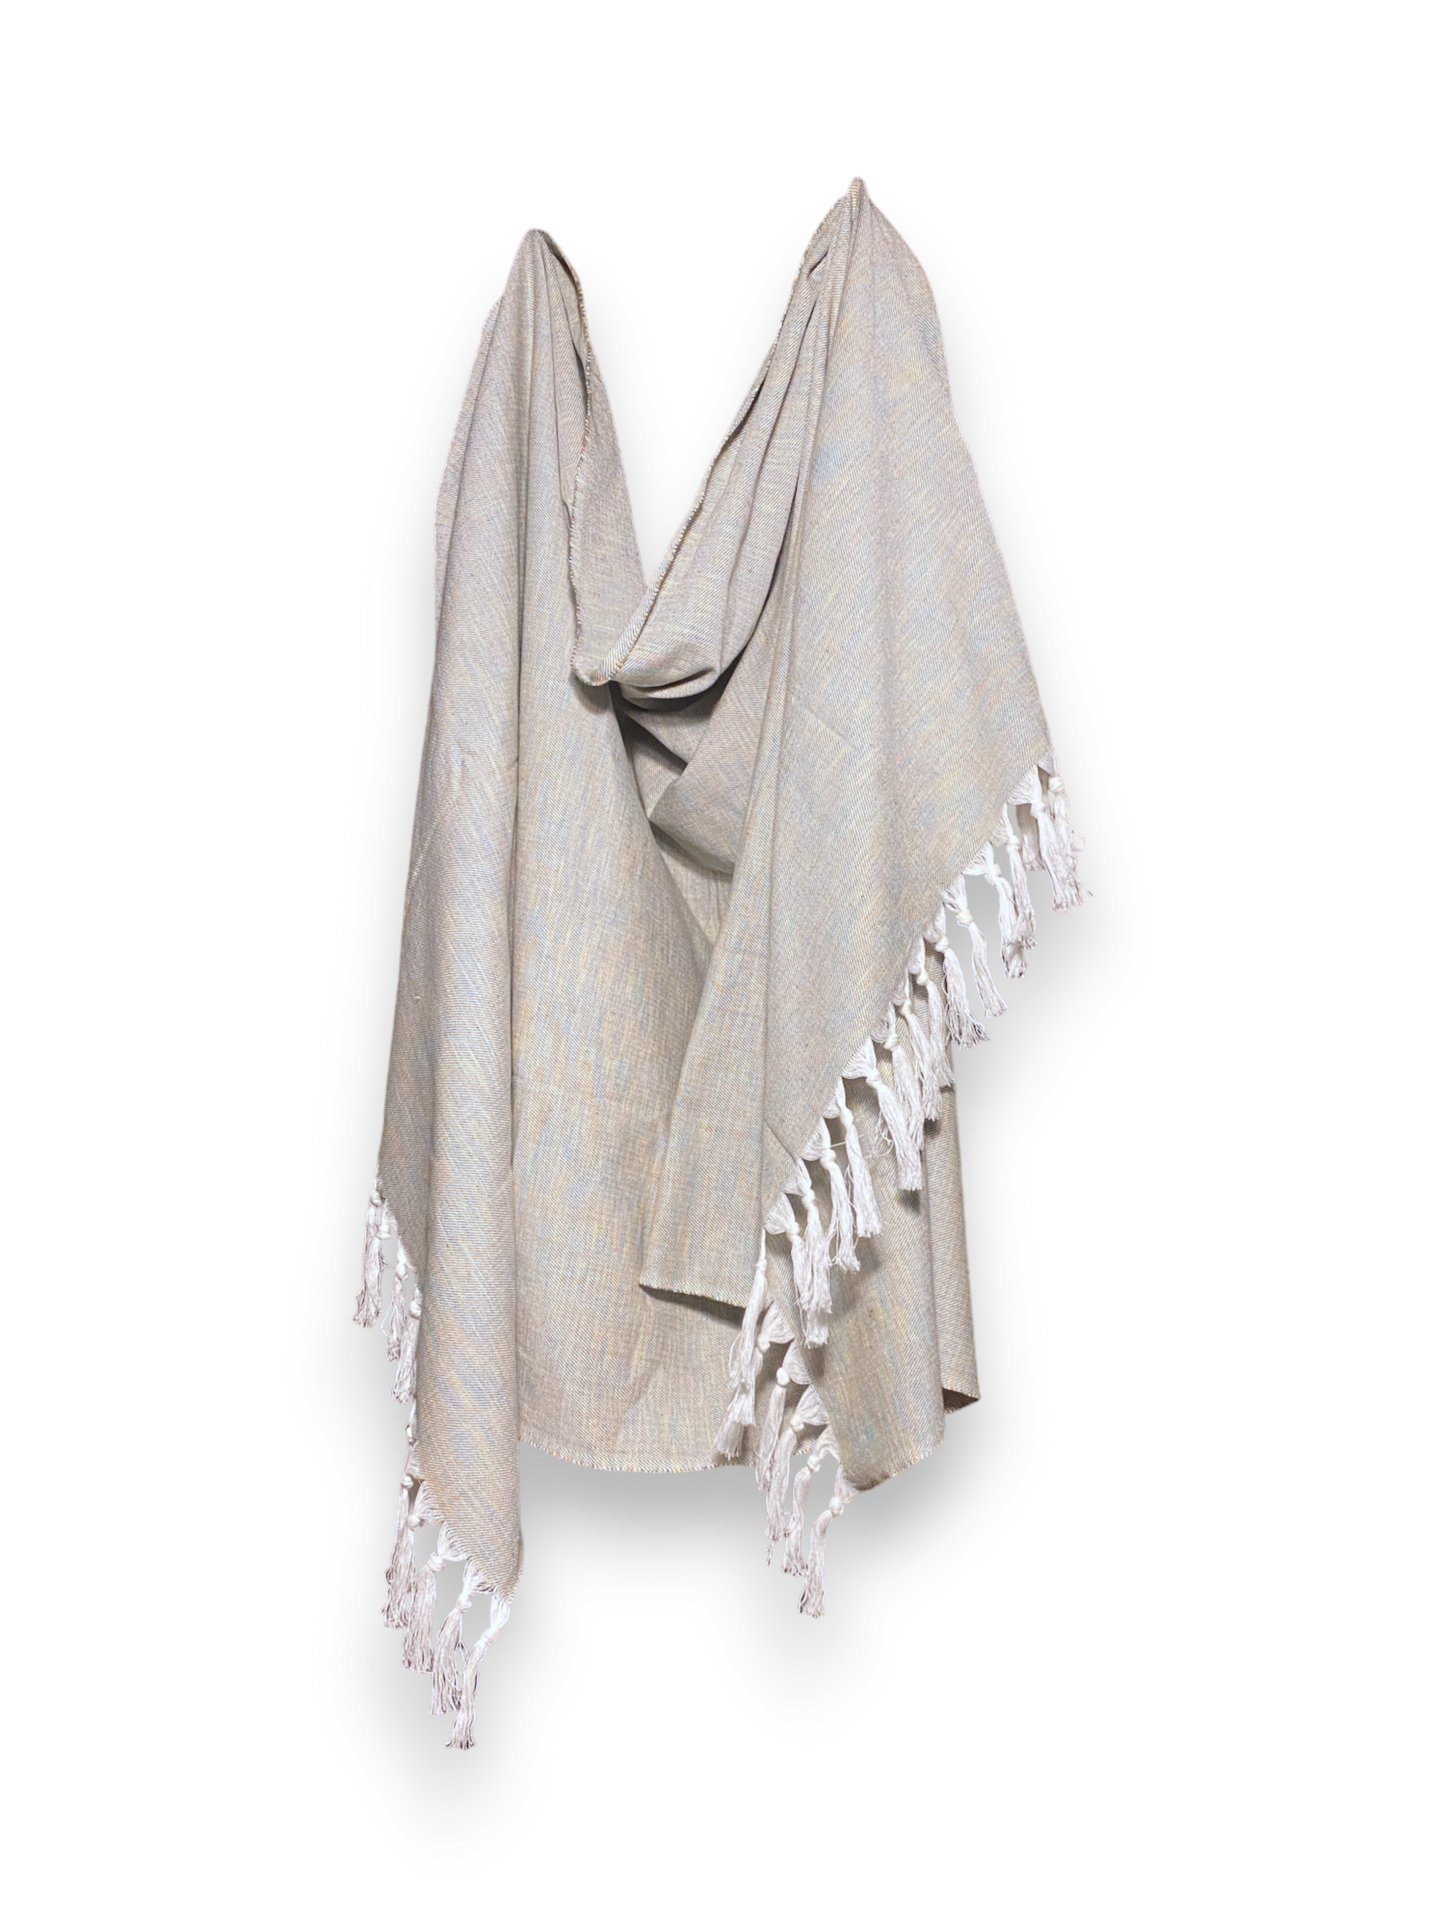 Hammam Towel (Cotton)